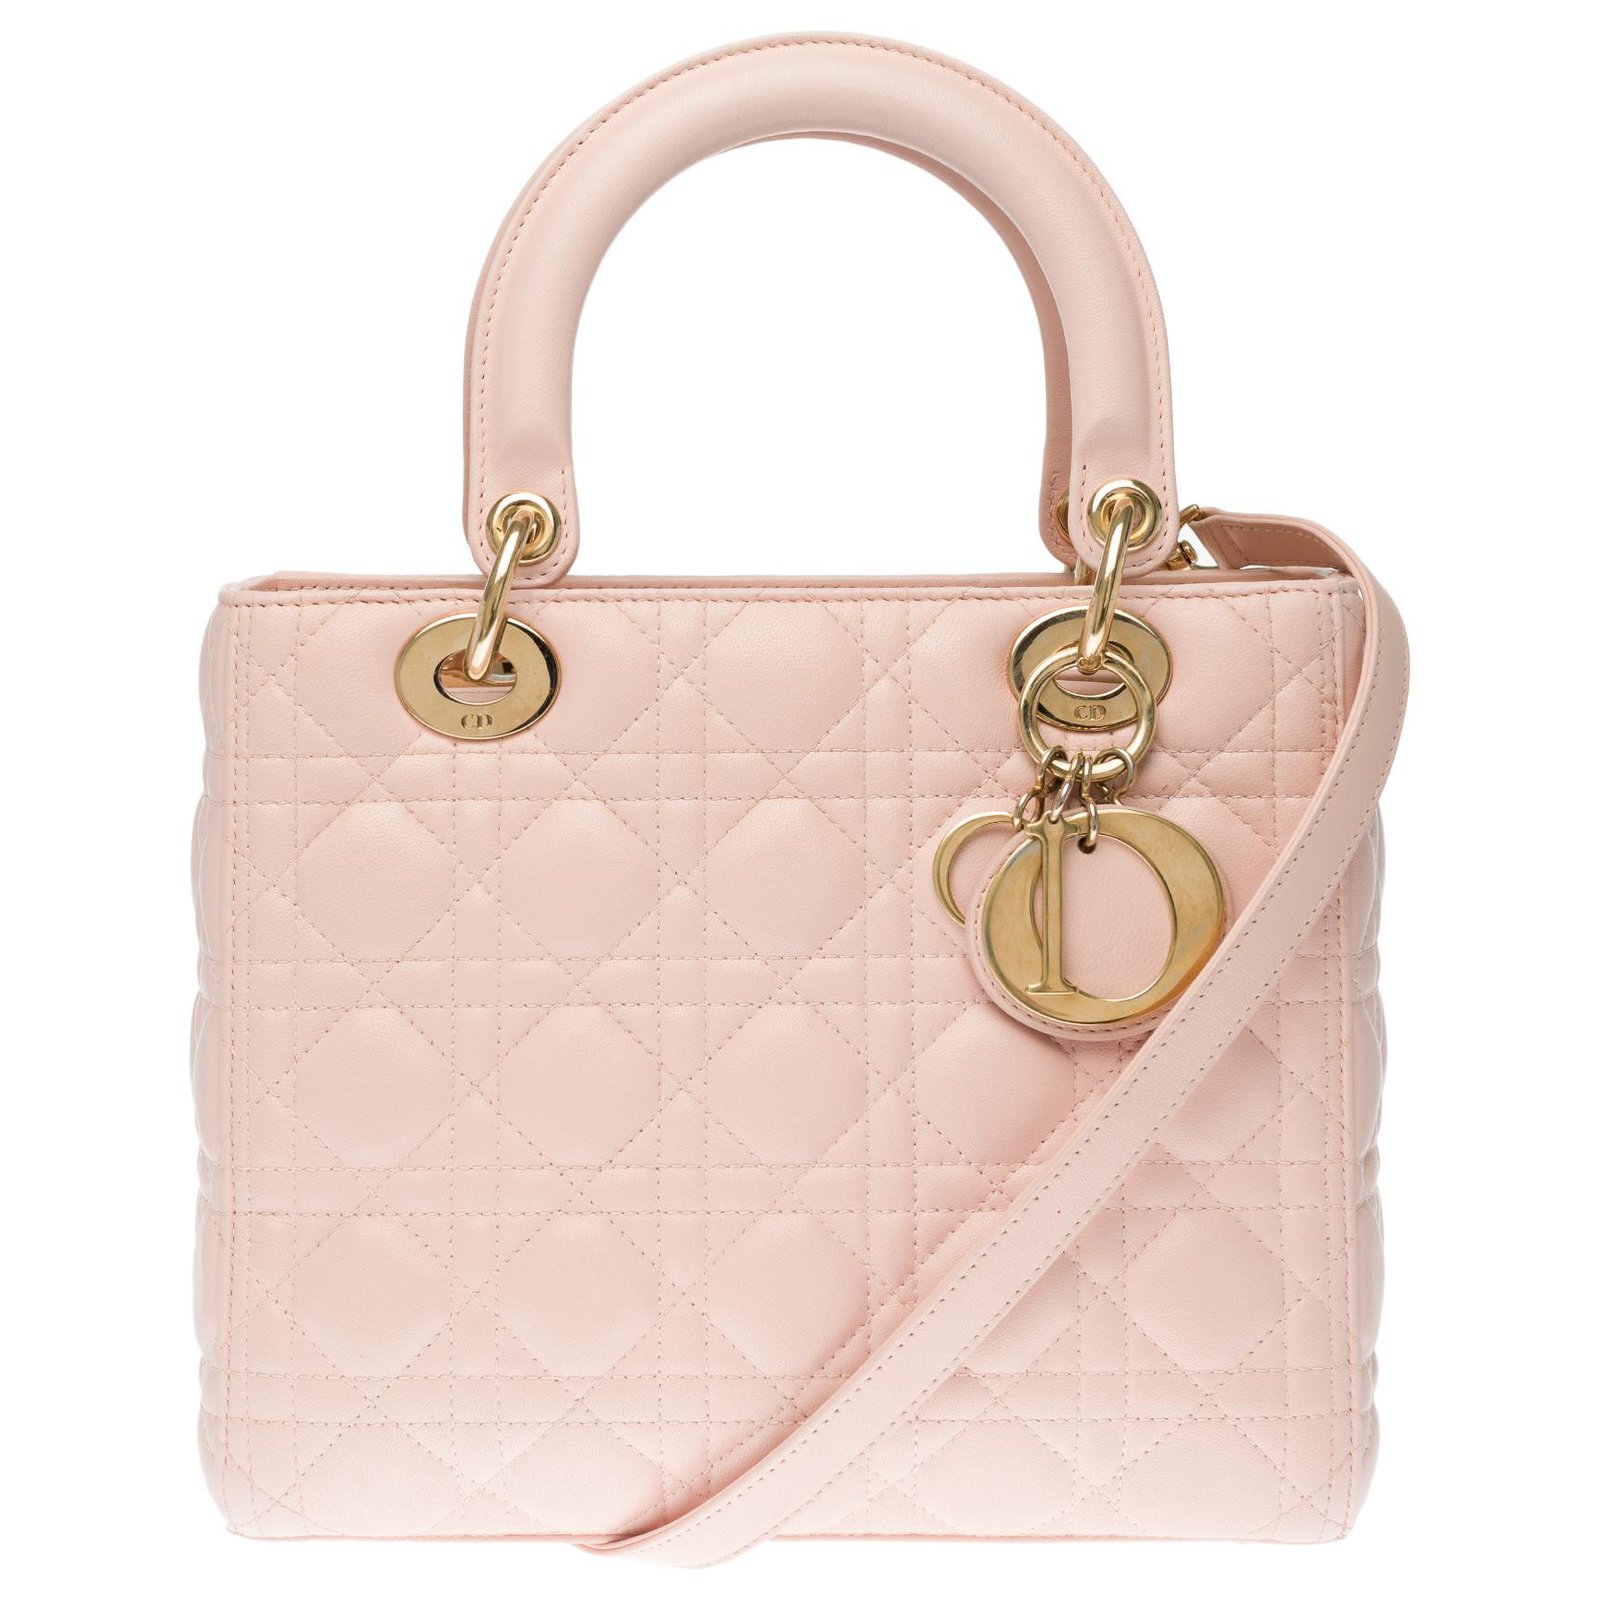 Dior Lady Dior bag pink  Lady dior, Lady dior bag, Bags